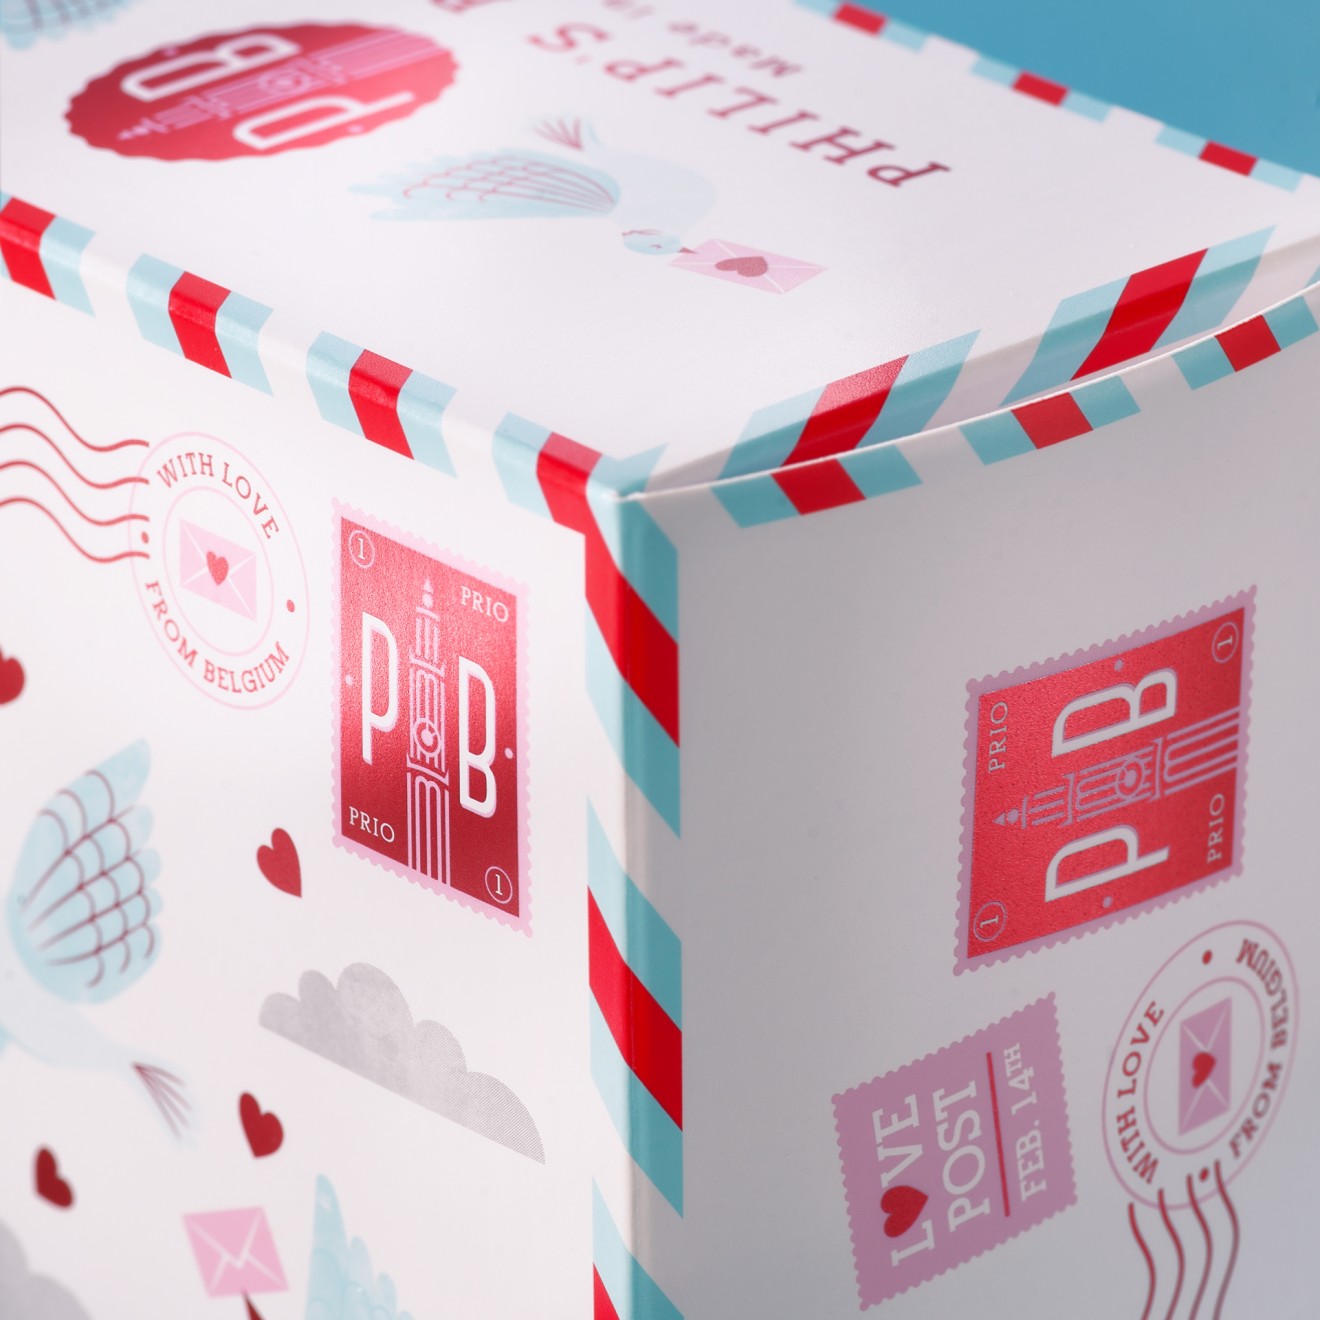 Quatre Mains package design - pb, Antwerp, biscuits